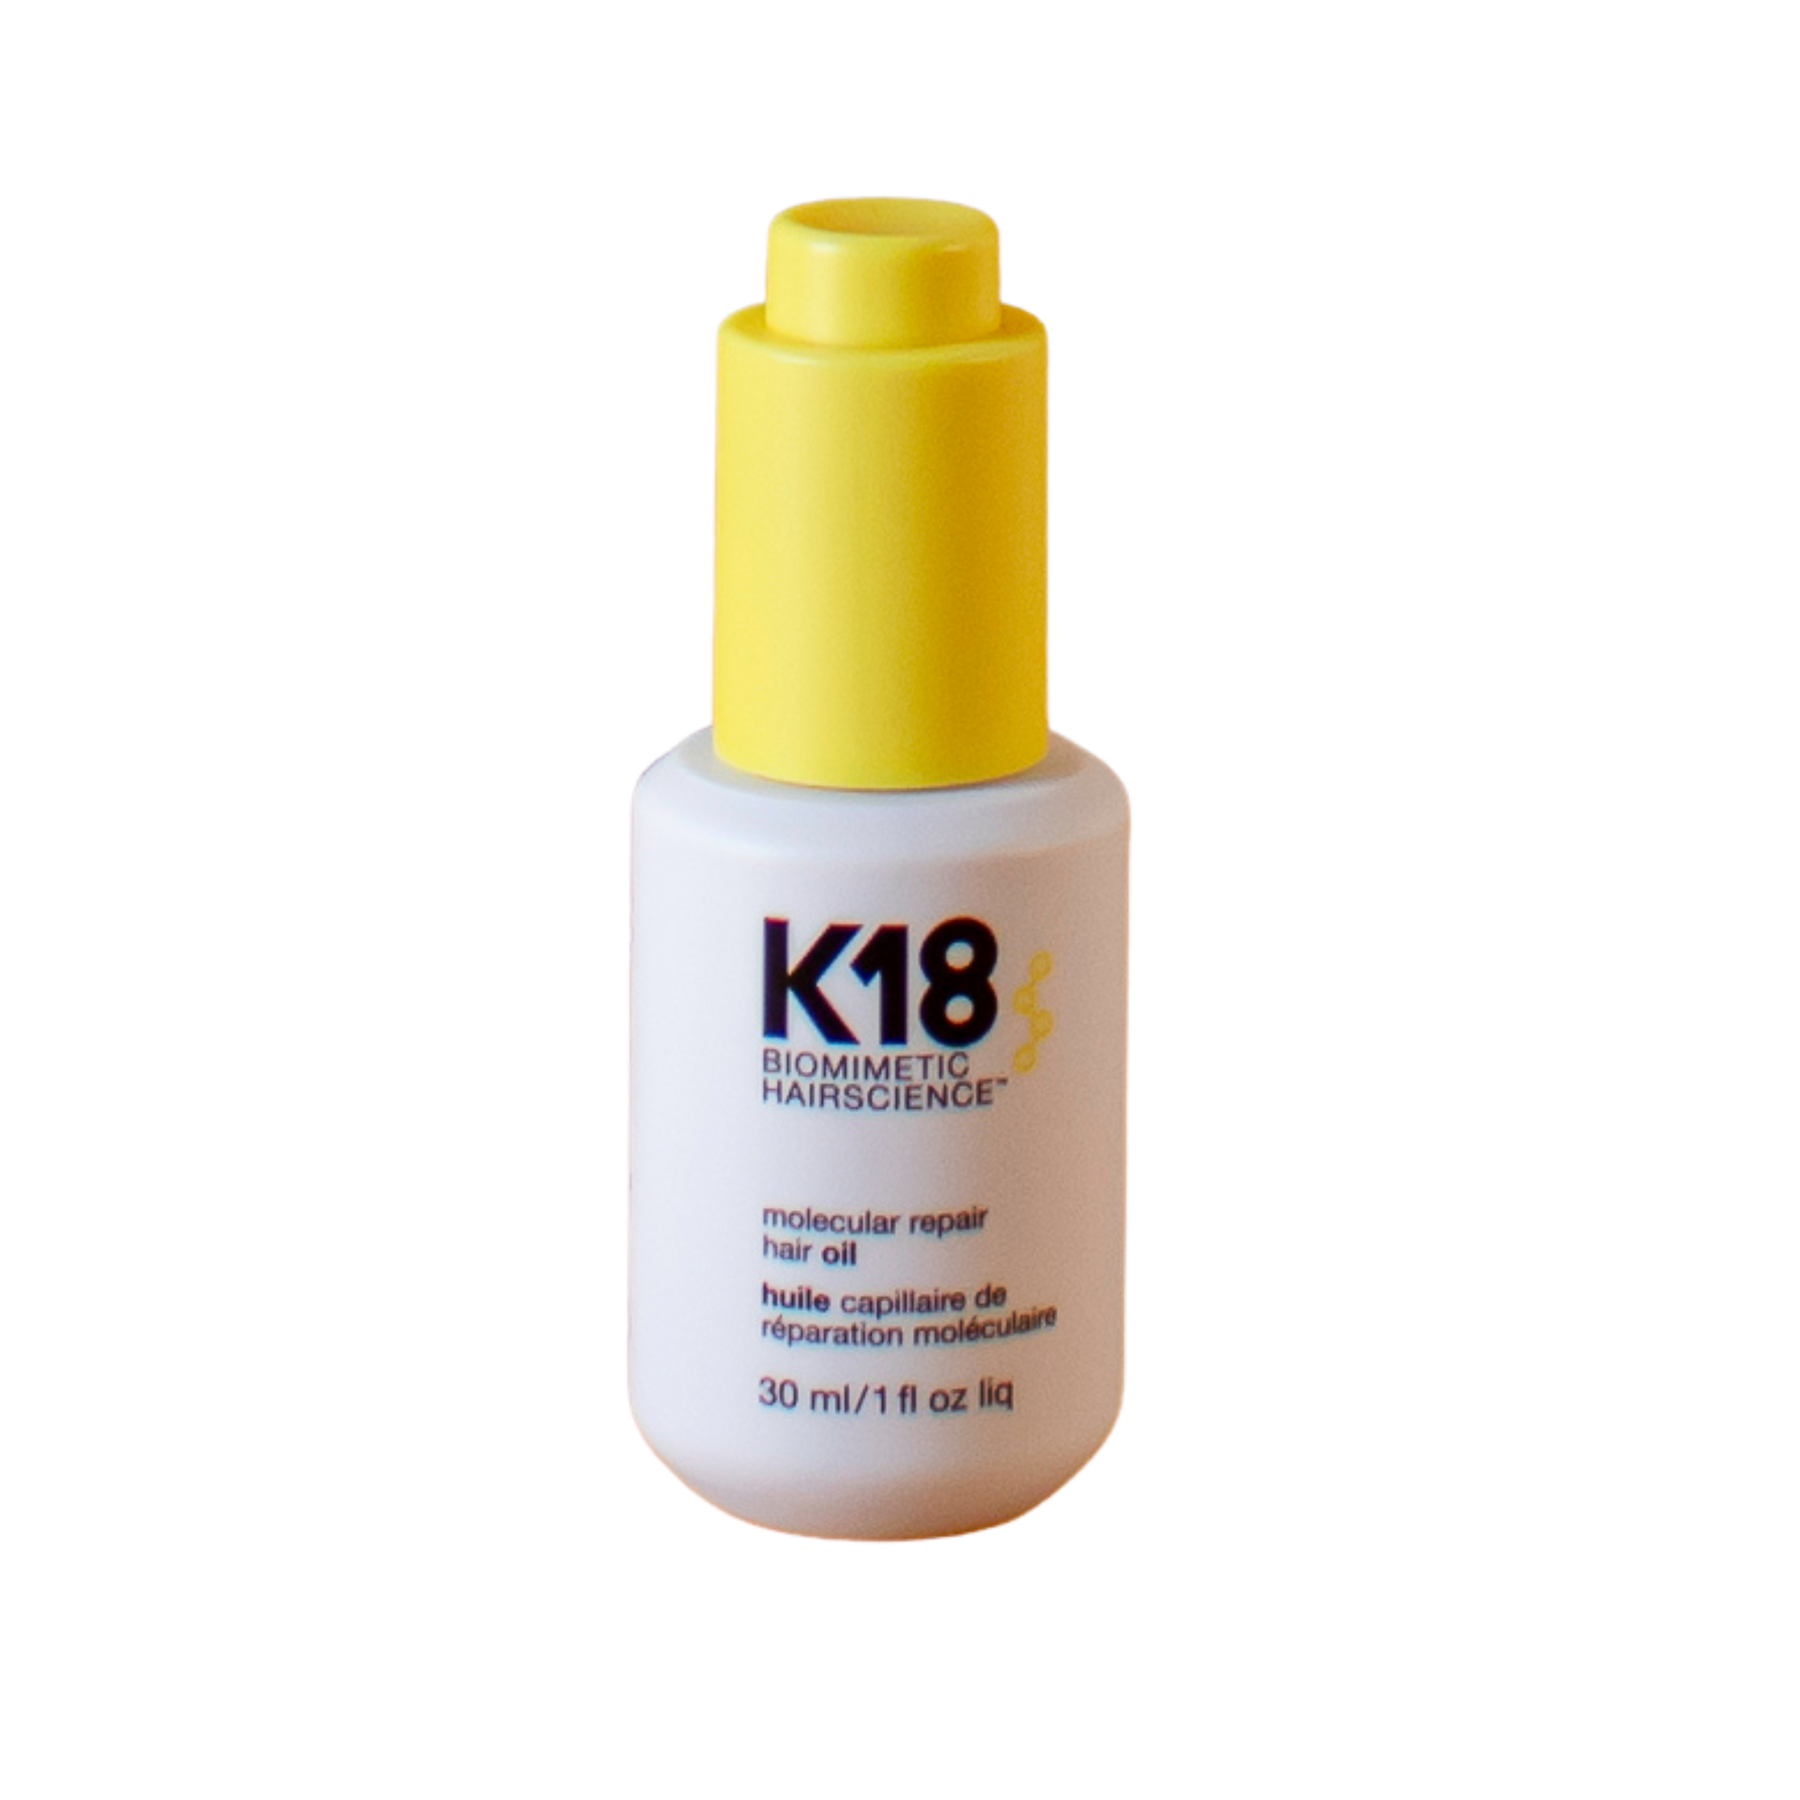 K18 molecular repair hair oil